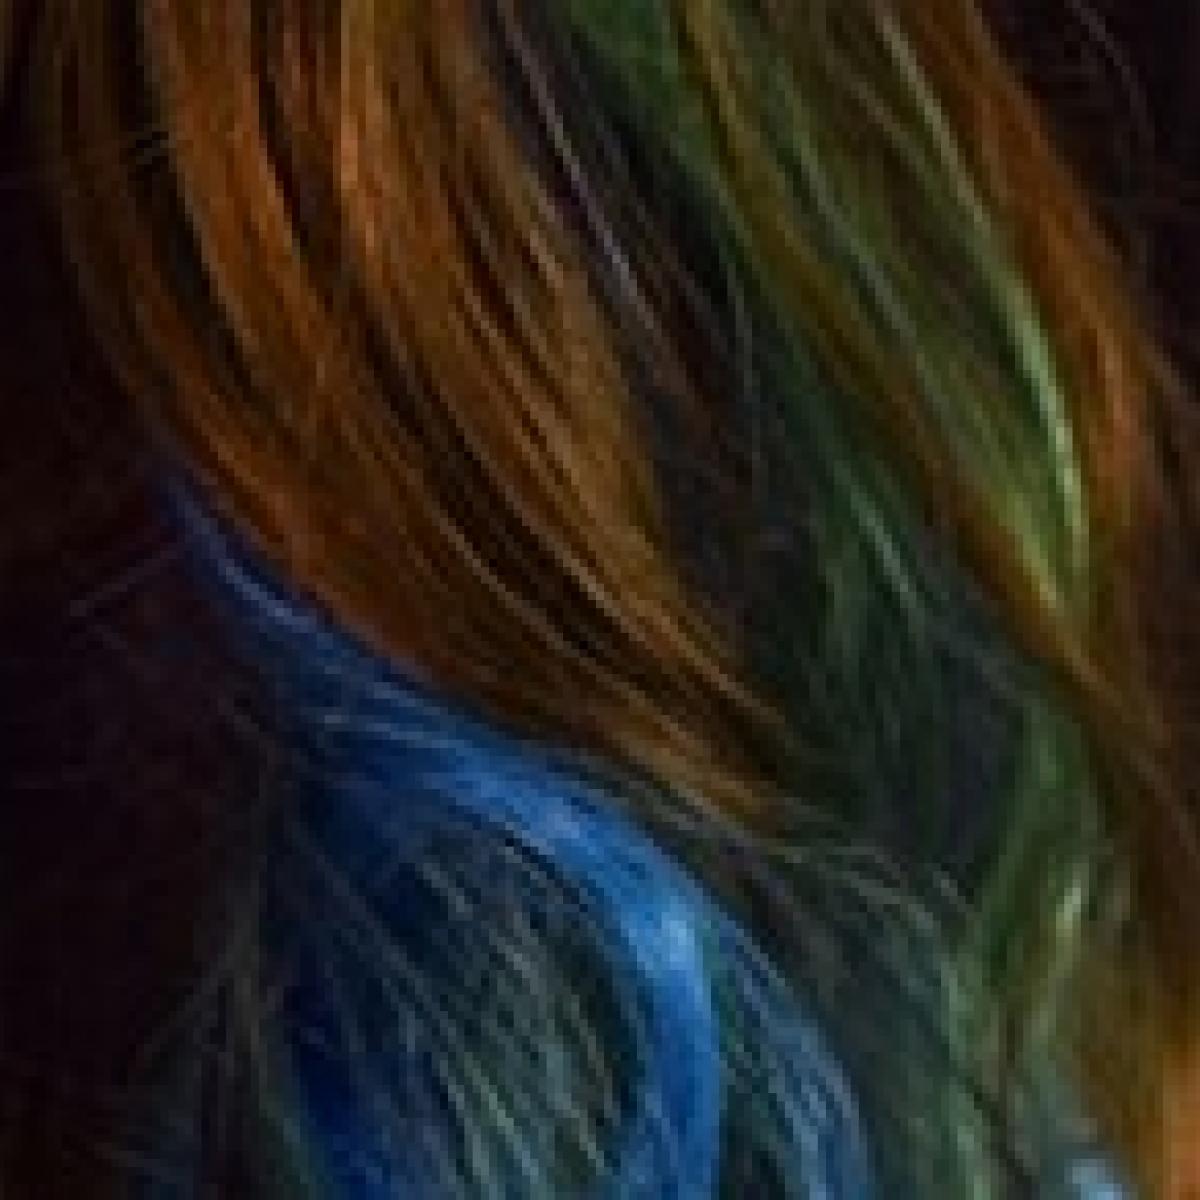 Neodoll Allure Wig - Lilah - Sex Doll Hair - Blue